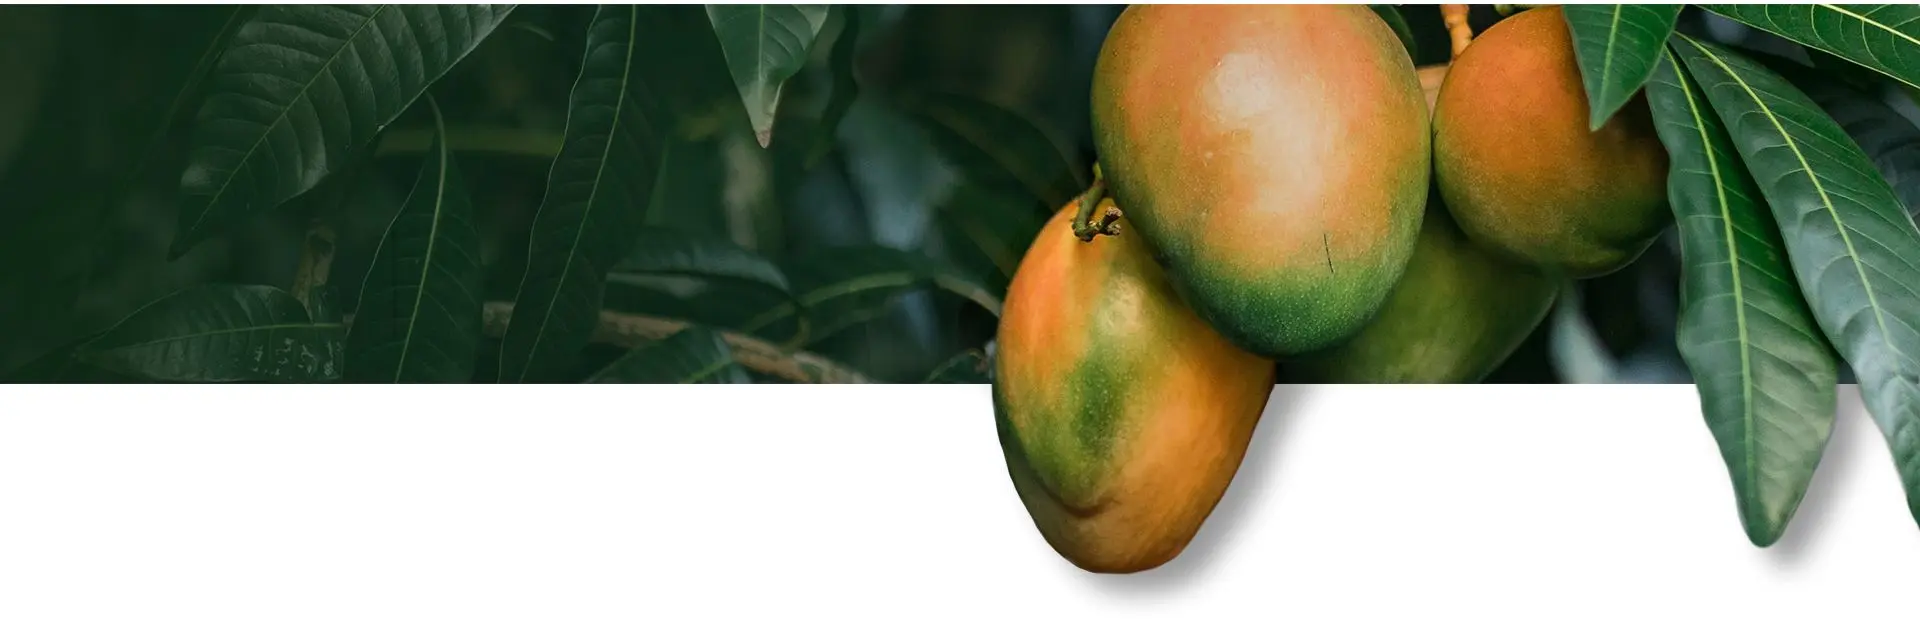 Mango fruit and leaves